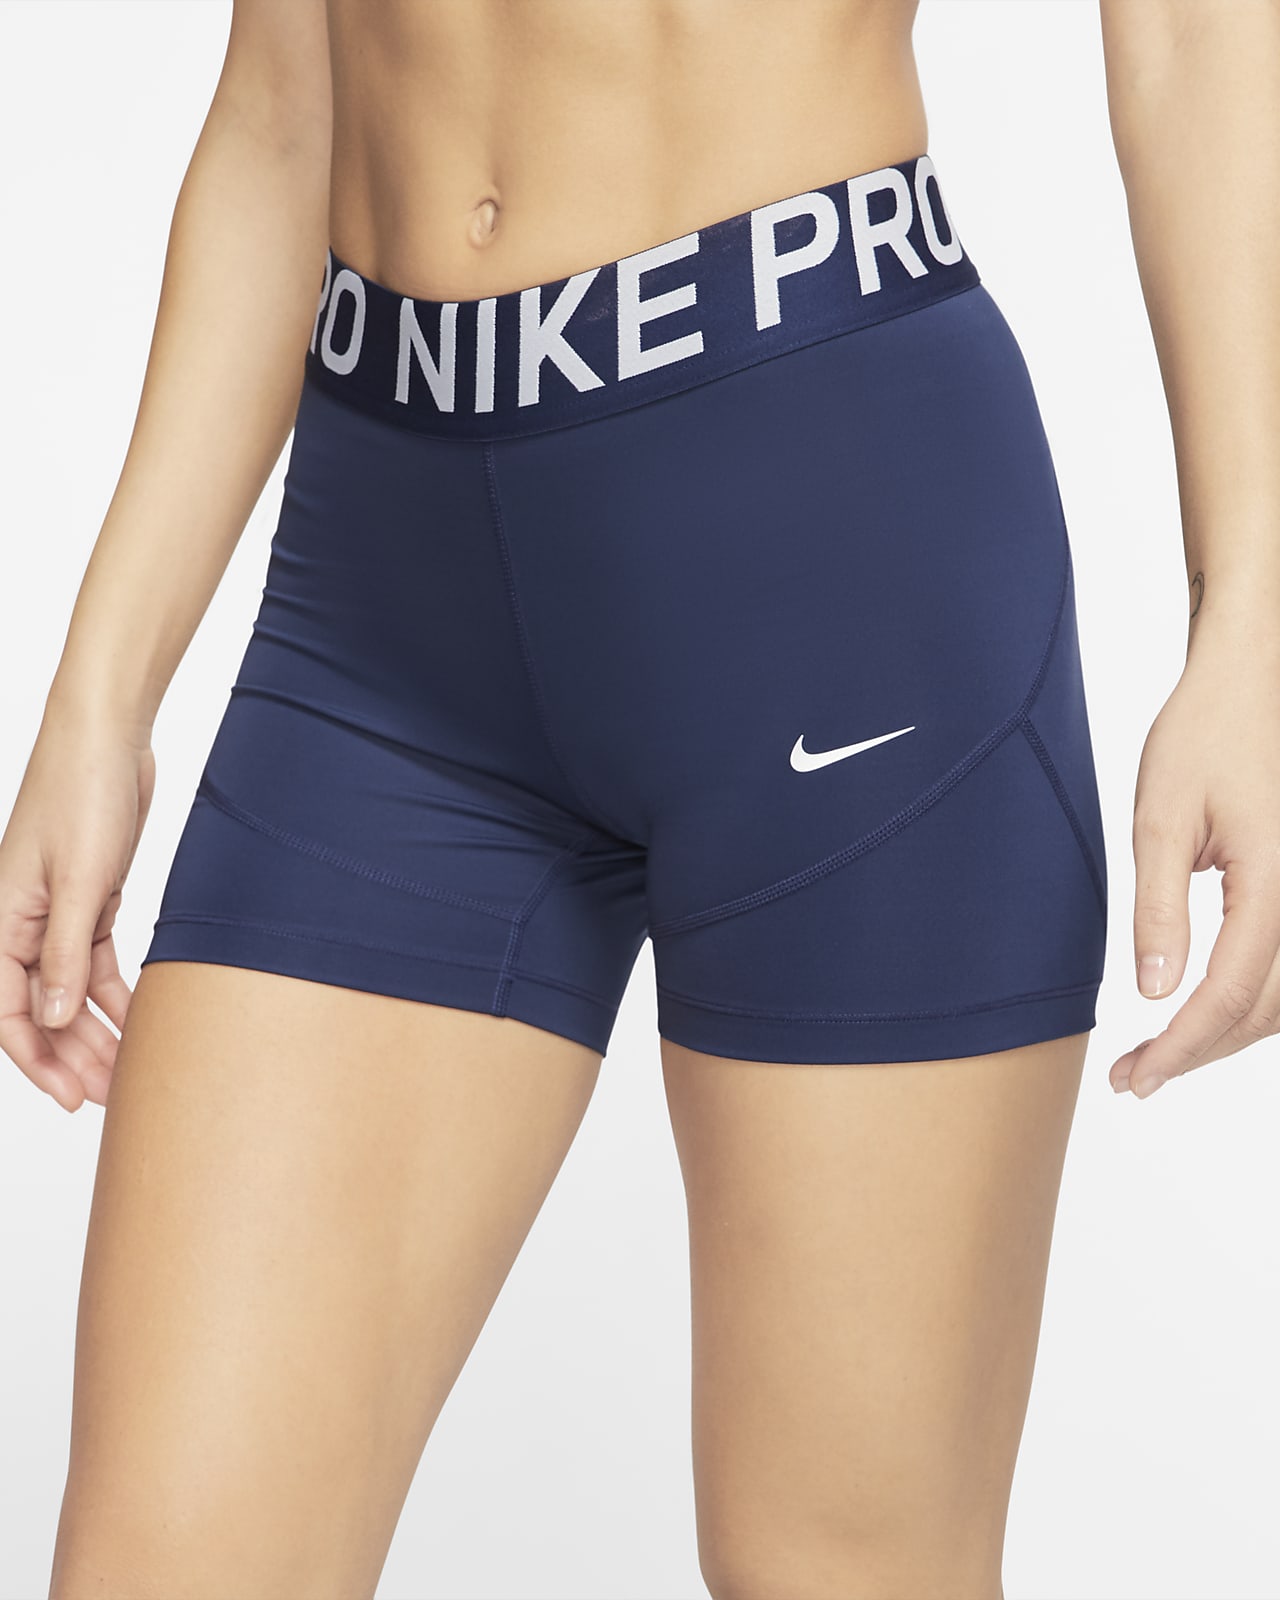 Nike Pro Damenshorts (ca. 13 cm). Nike AT